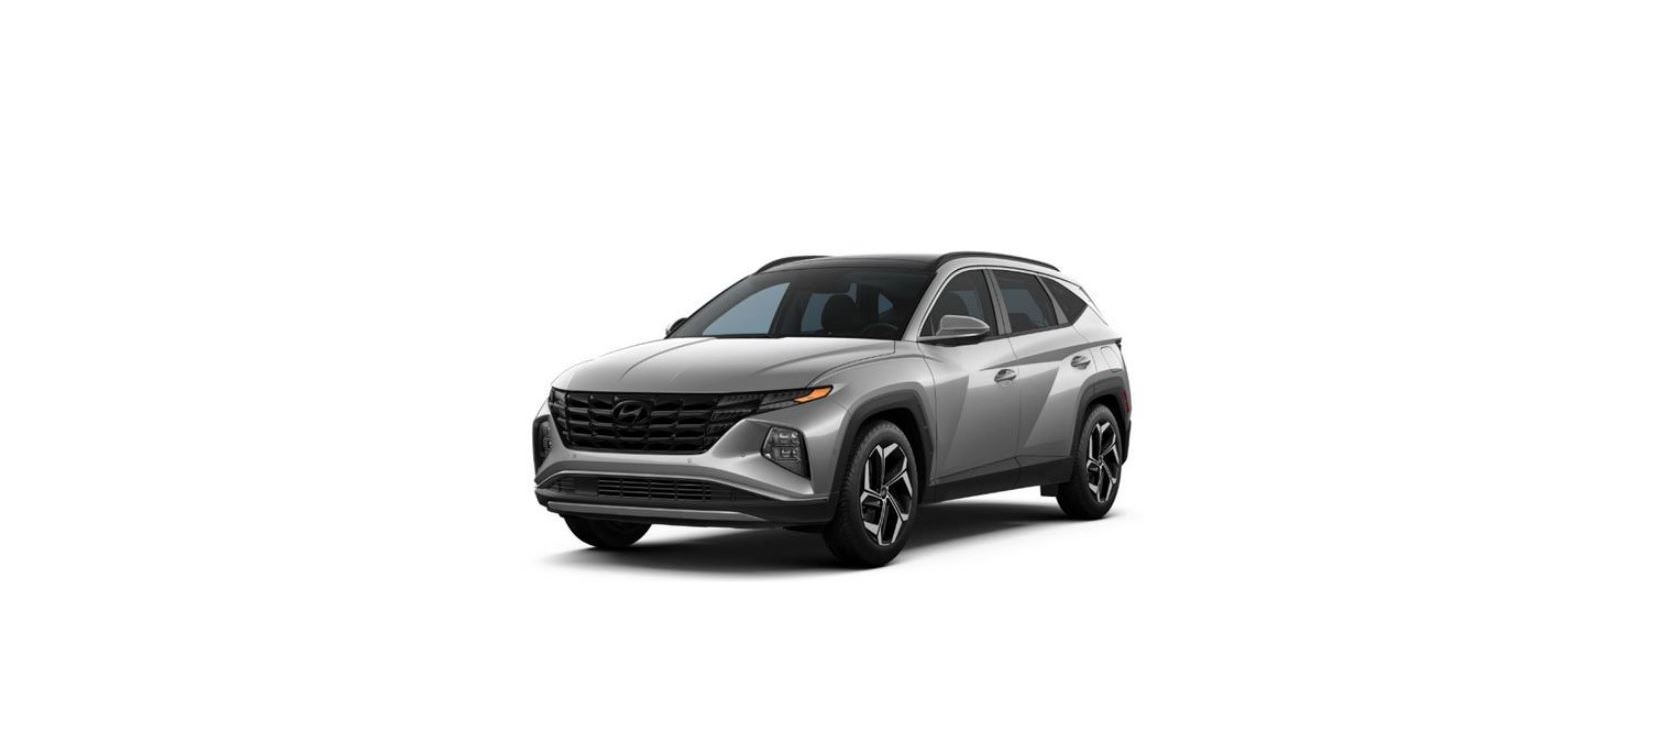 2022 Hyundai Tucson feature